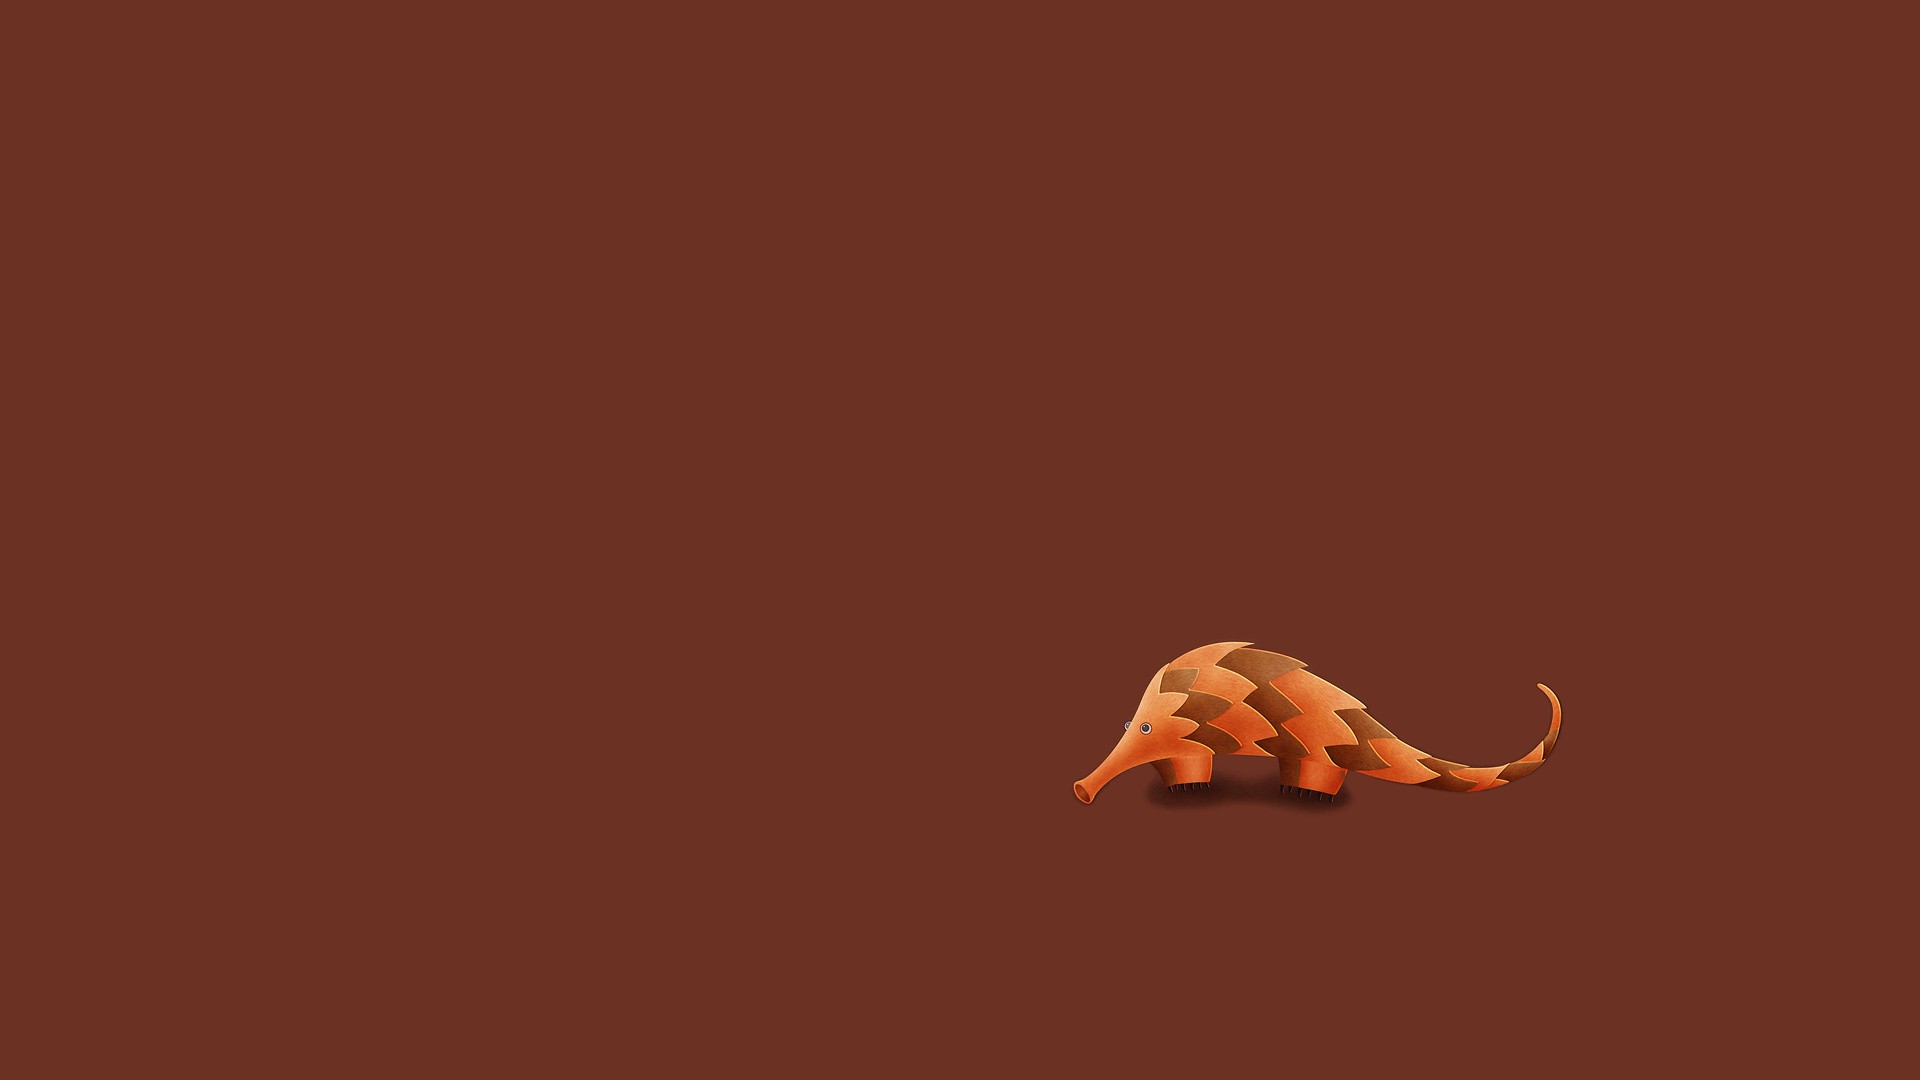 General 1920x1080 simple background digital art animals Ubuntu artwork minimalism